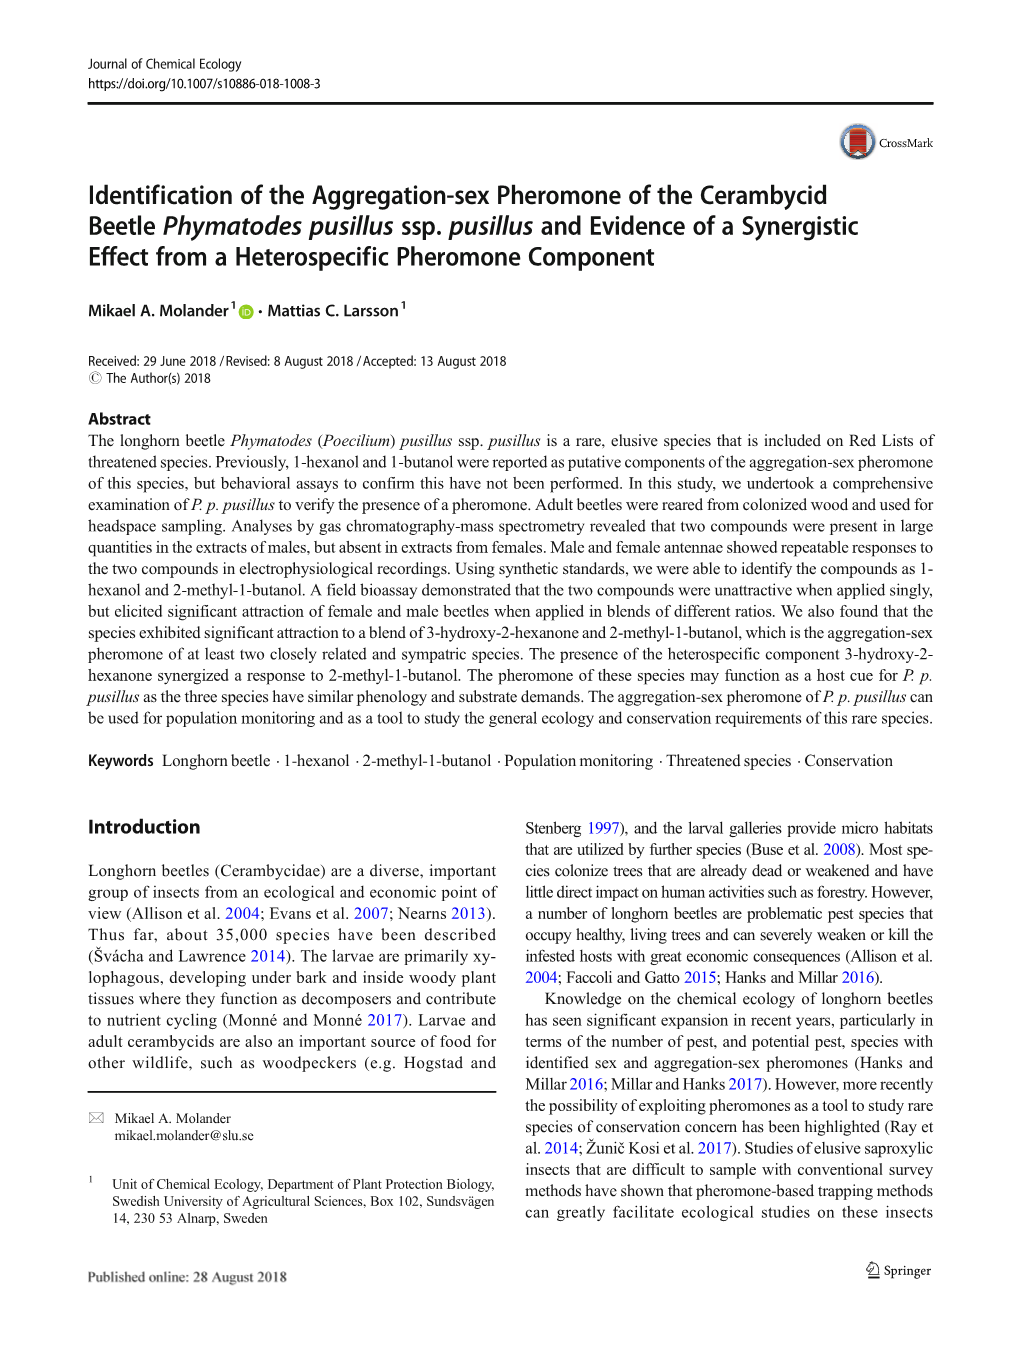 Identification of the Aggregation-Sex Pheromone of the Cerambycid Beetle Phymatodes Pusillus Ssp